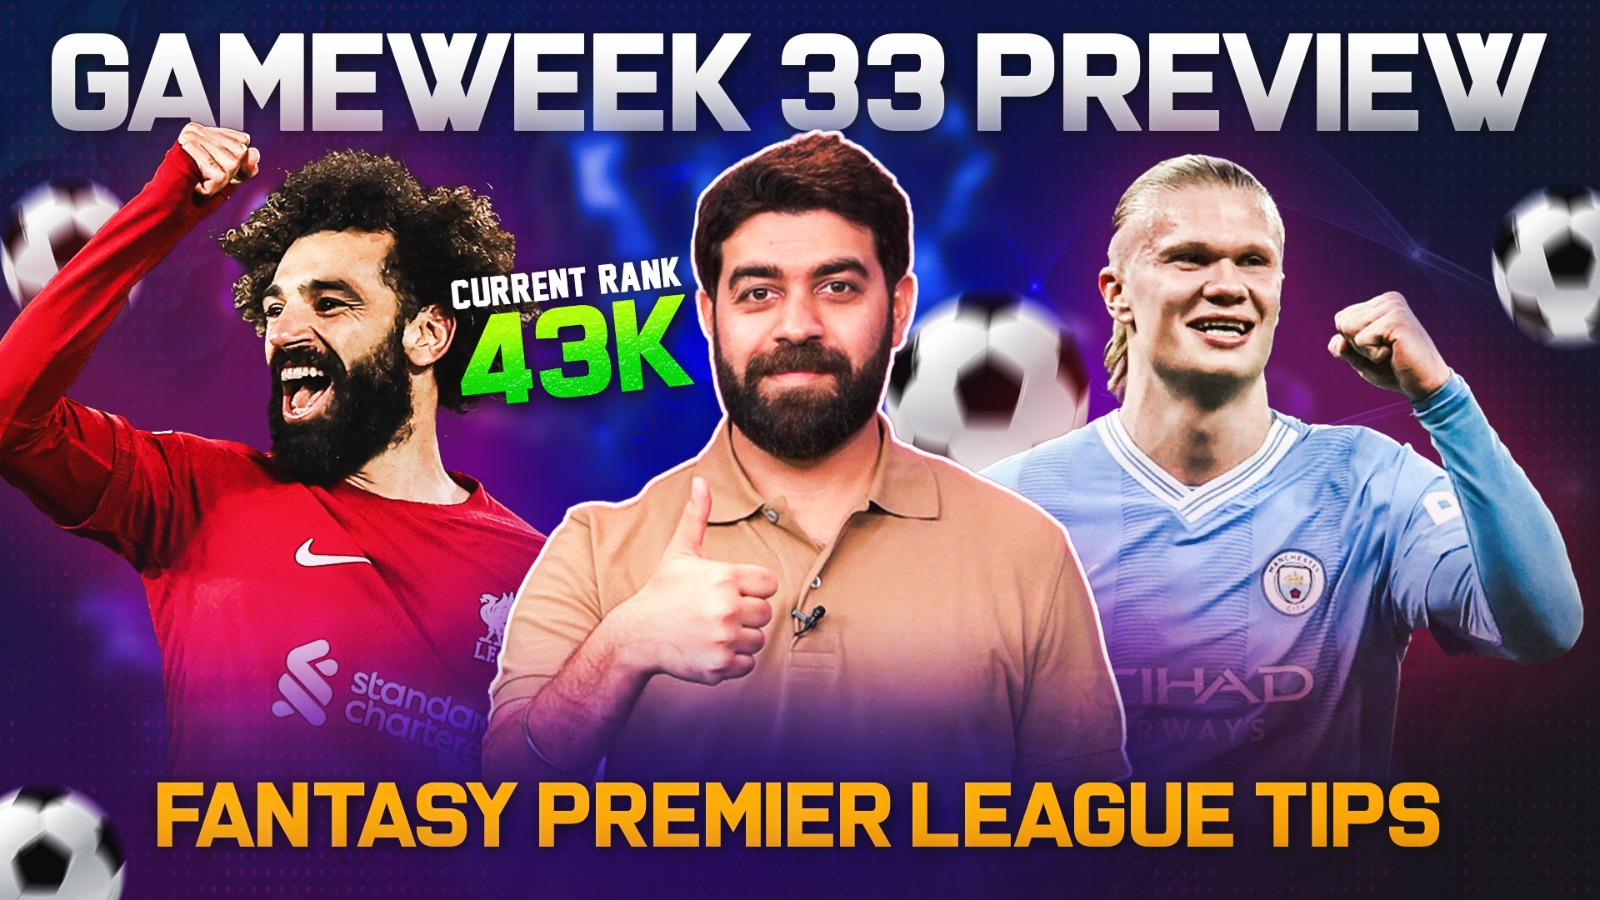 Gameweek 33 Preview – Fantasy Premier League